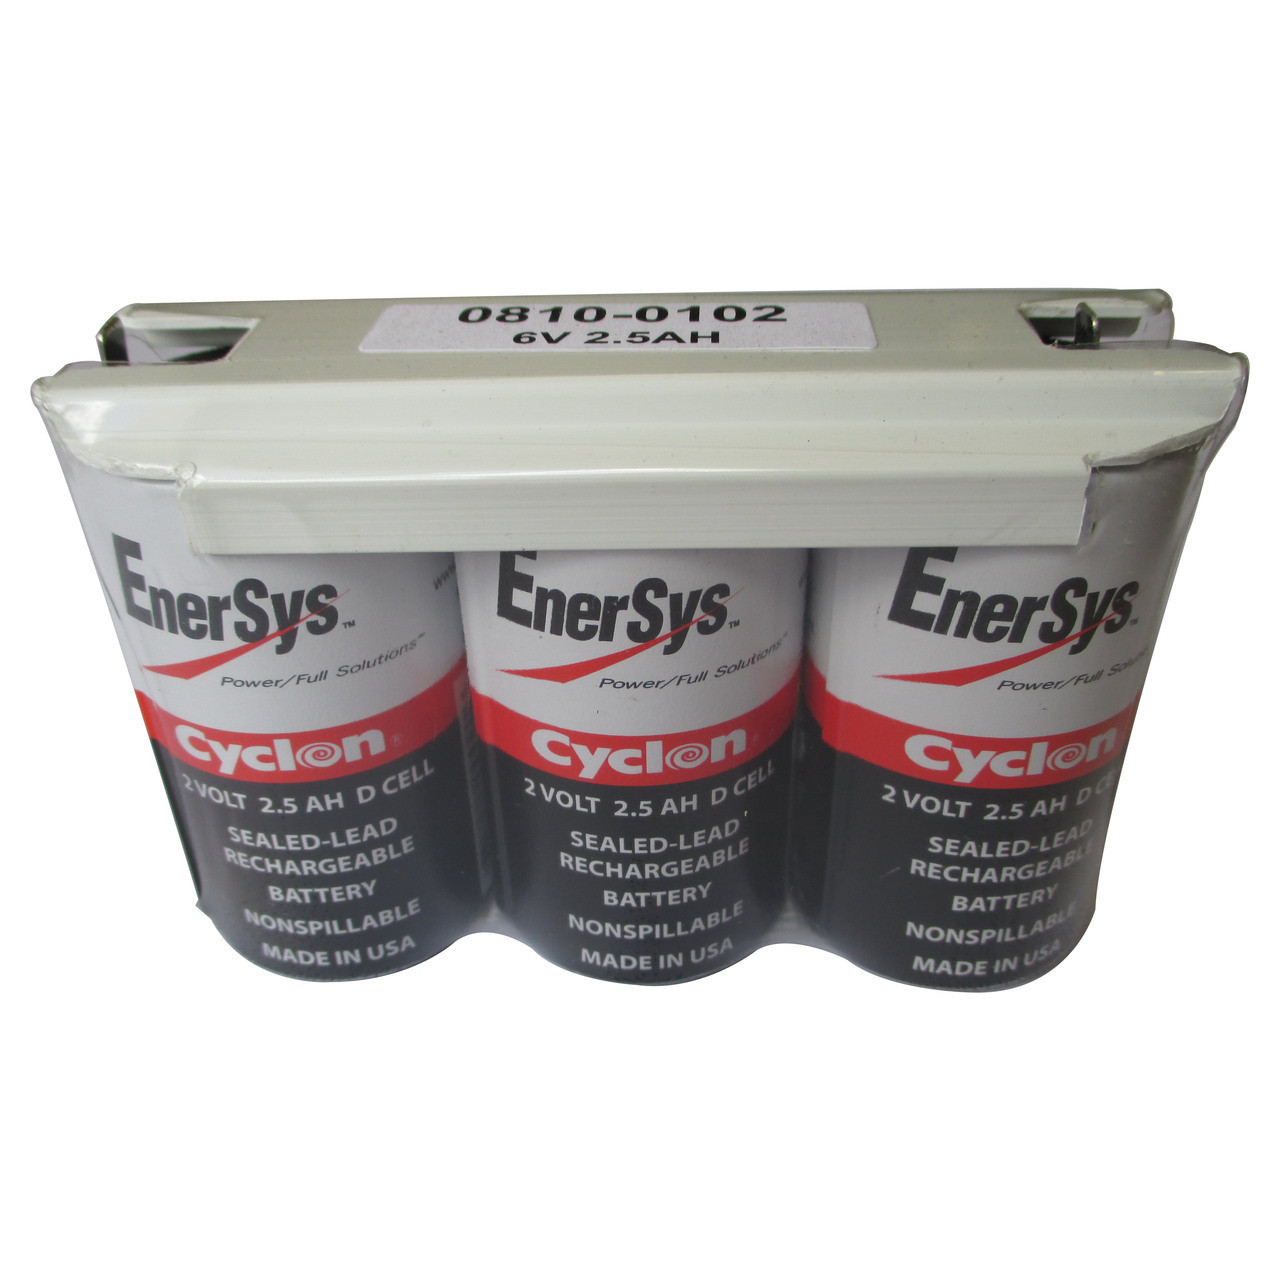 Enersys 0810-0102 6V 2.5Ah Battery